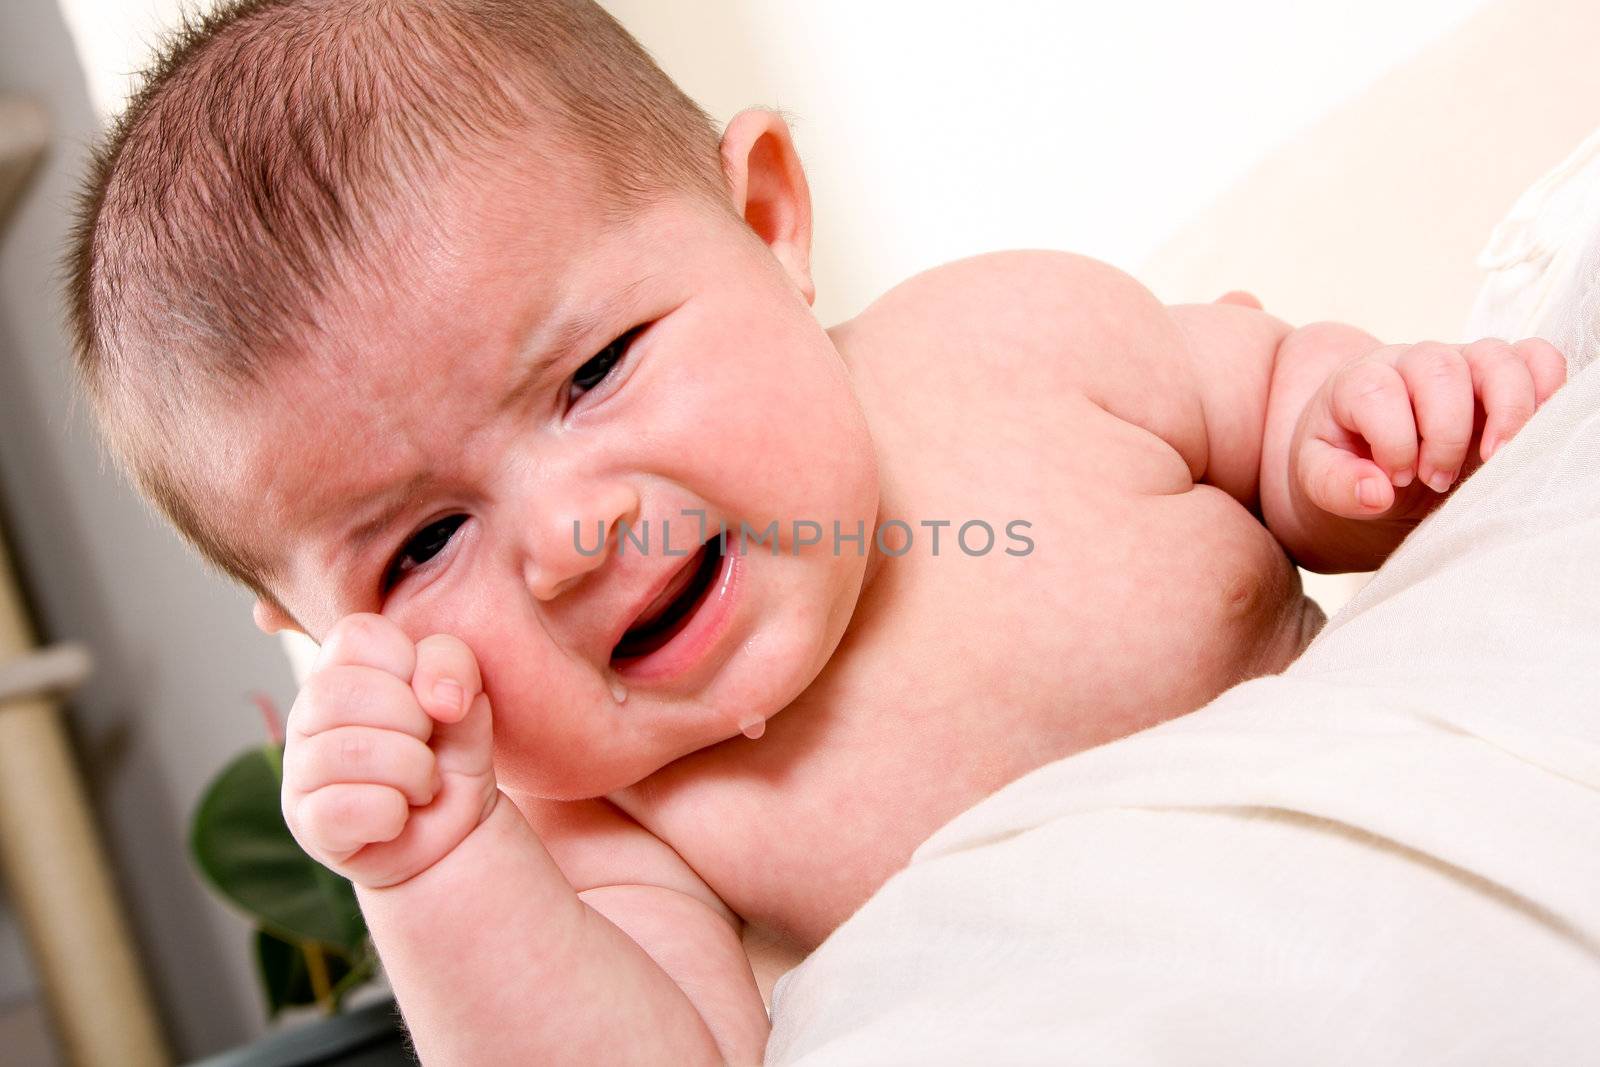 Crying baby by phakimata